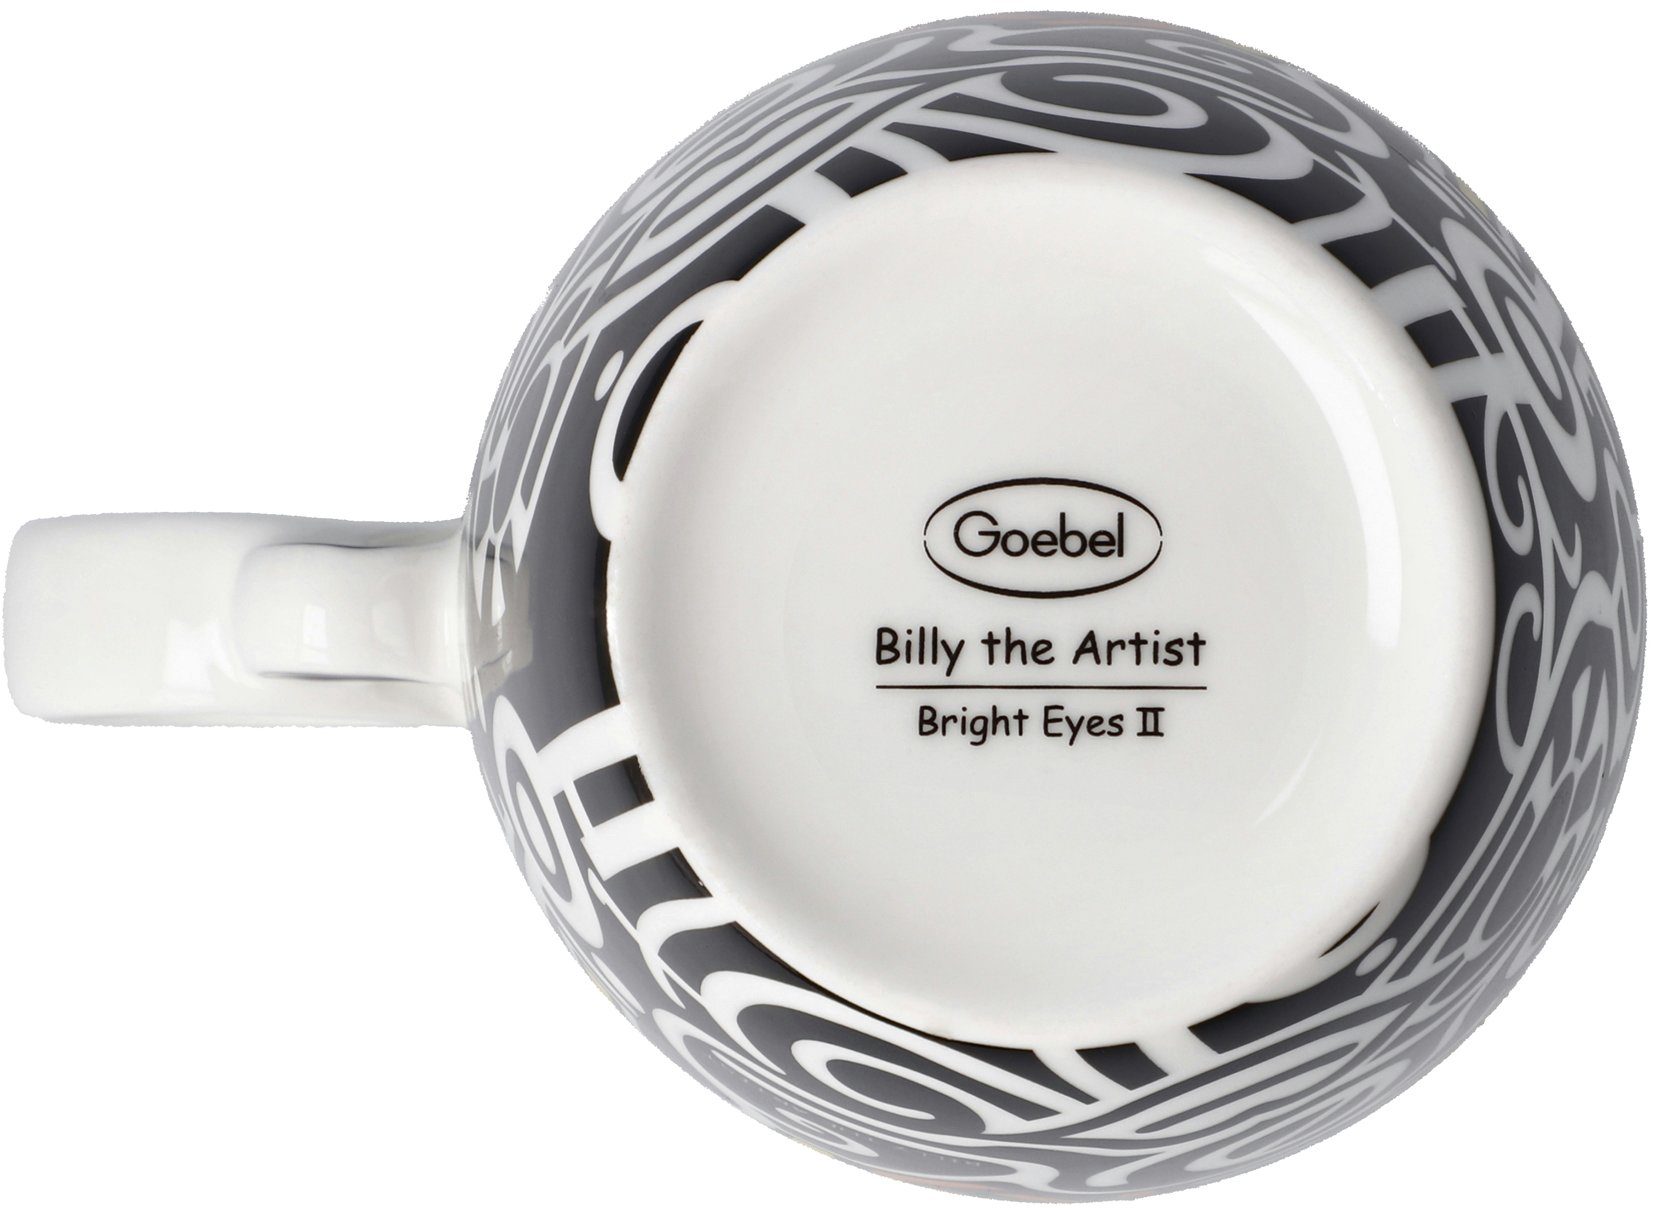 Goebel Tasse Billy Porzellan, Art, Künstlertasse, II Eyes the Artist Pop Billy The - Artist, Bright